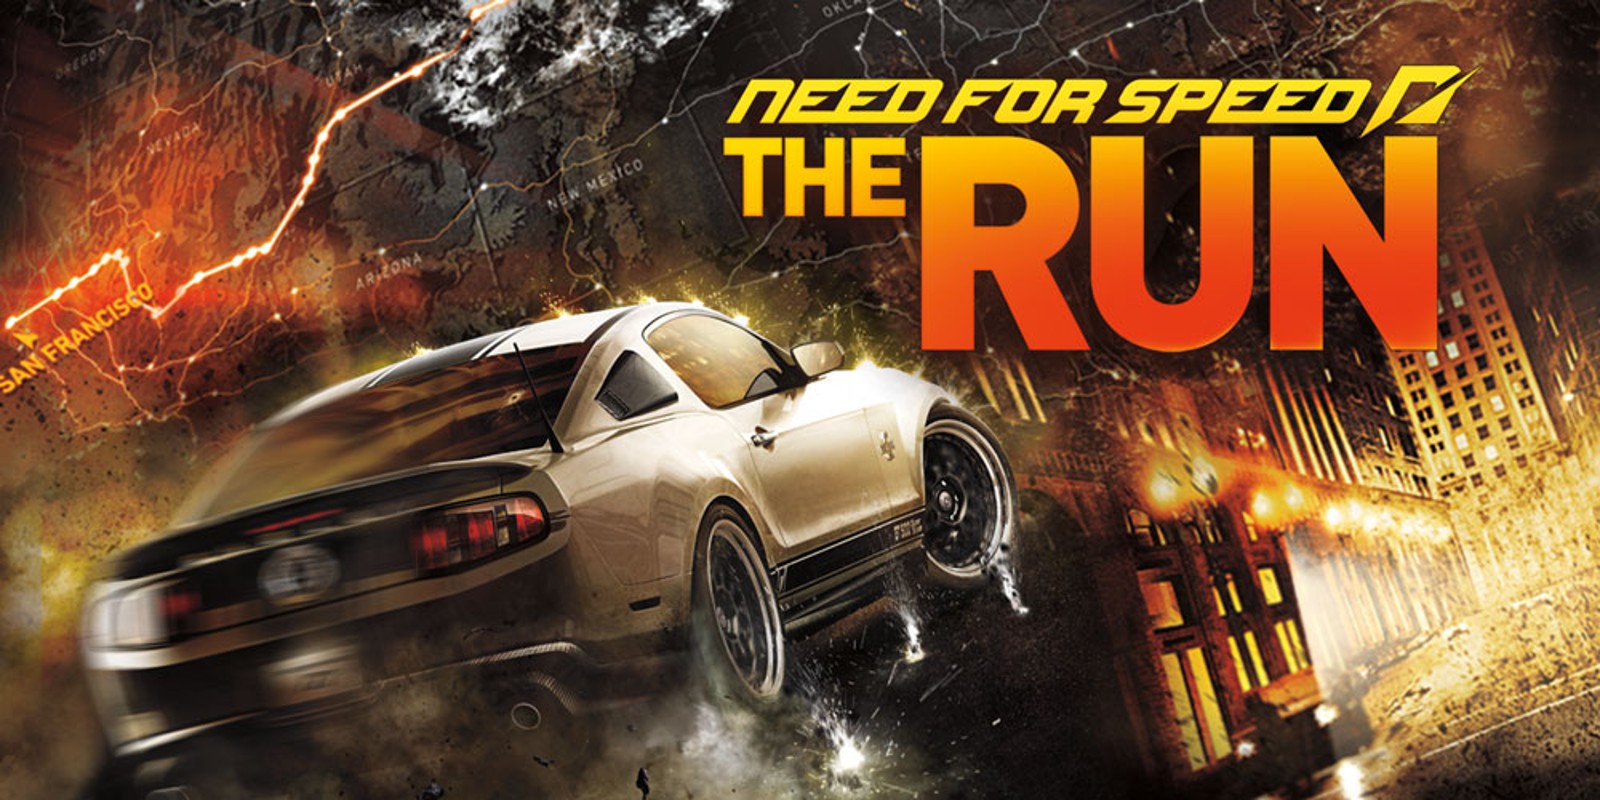 Need for Speed The run Illustration